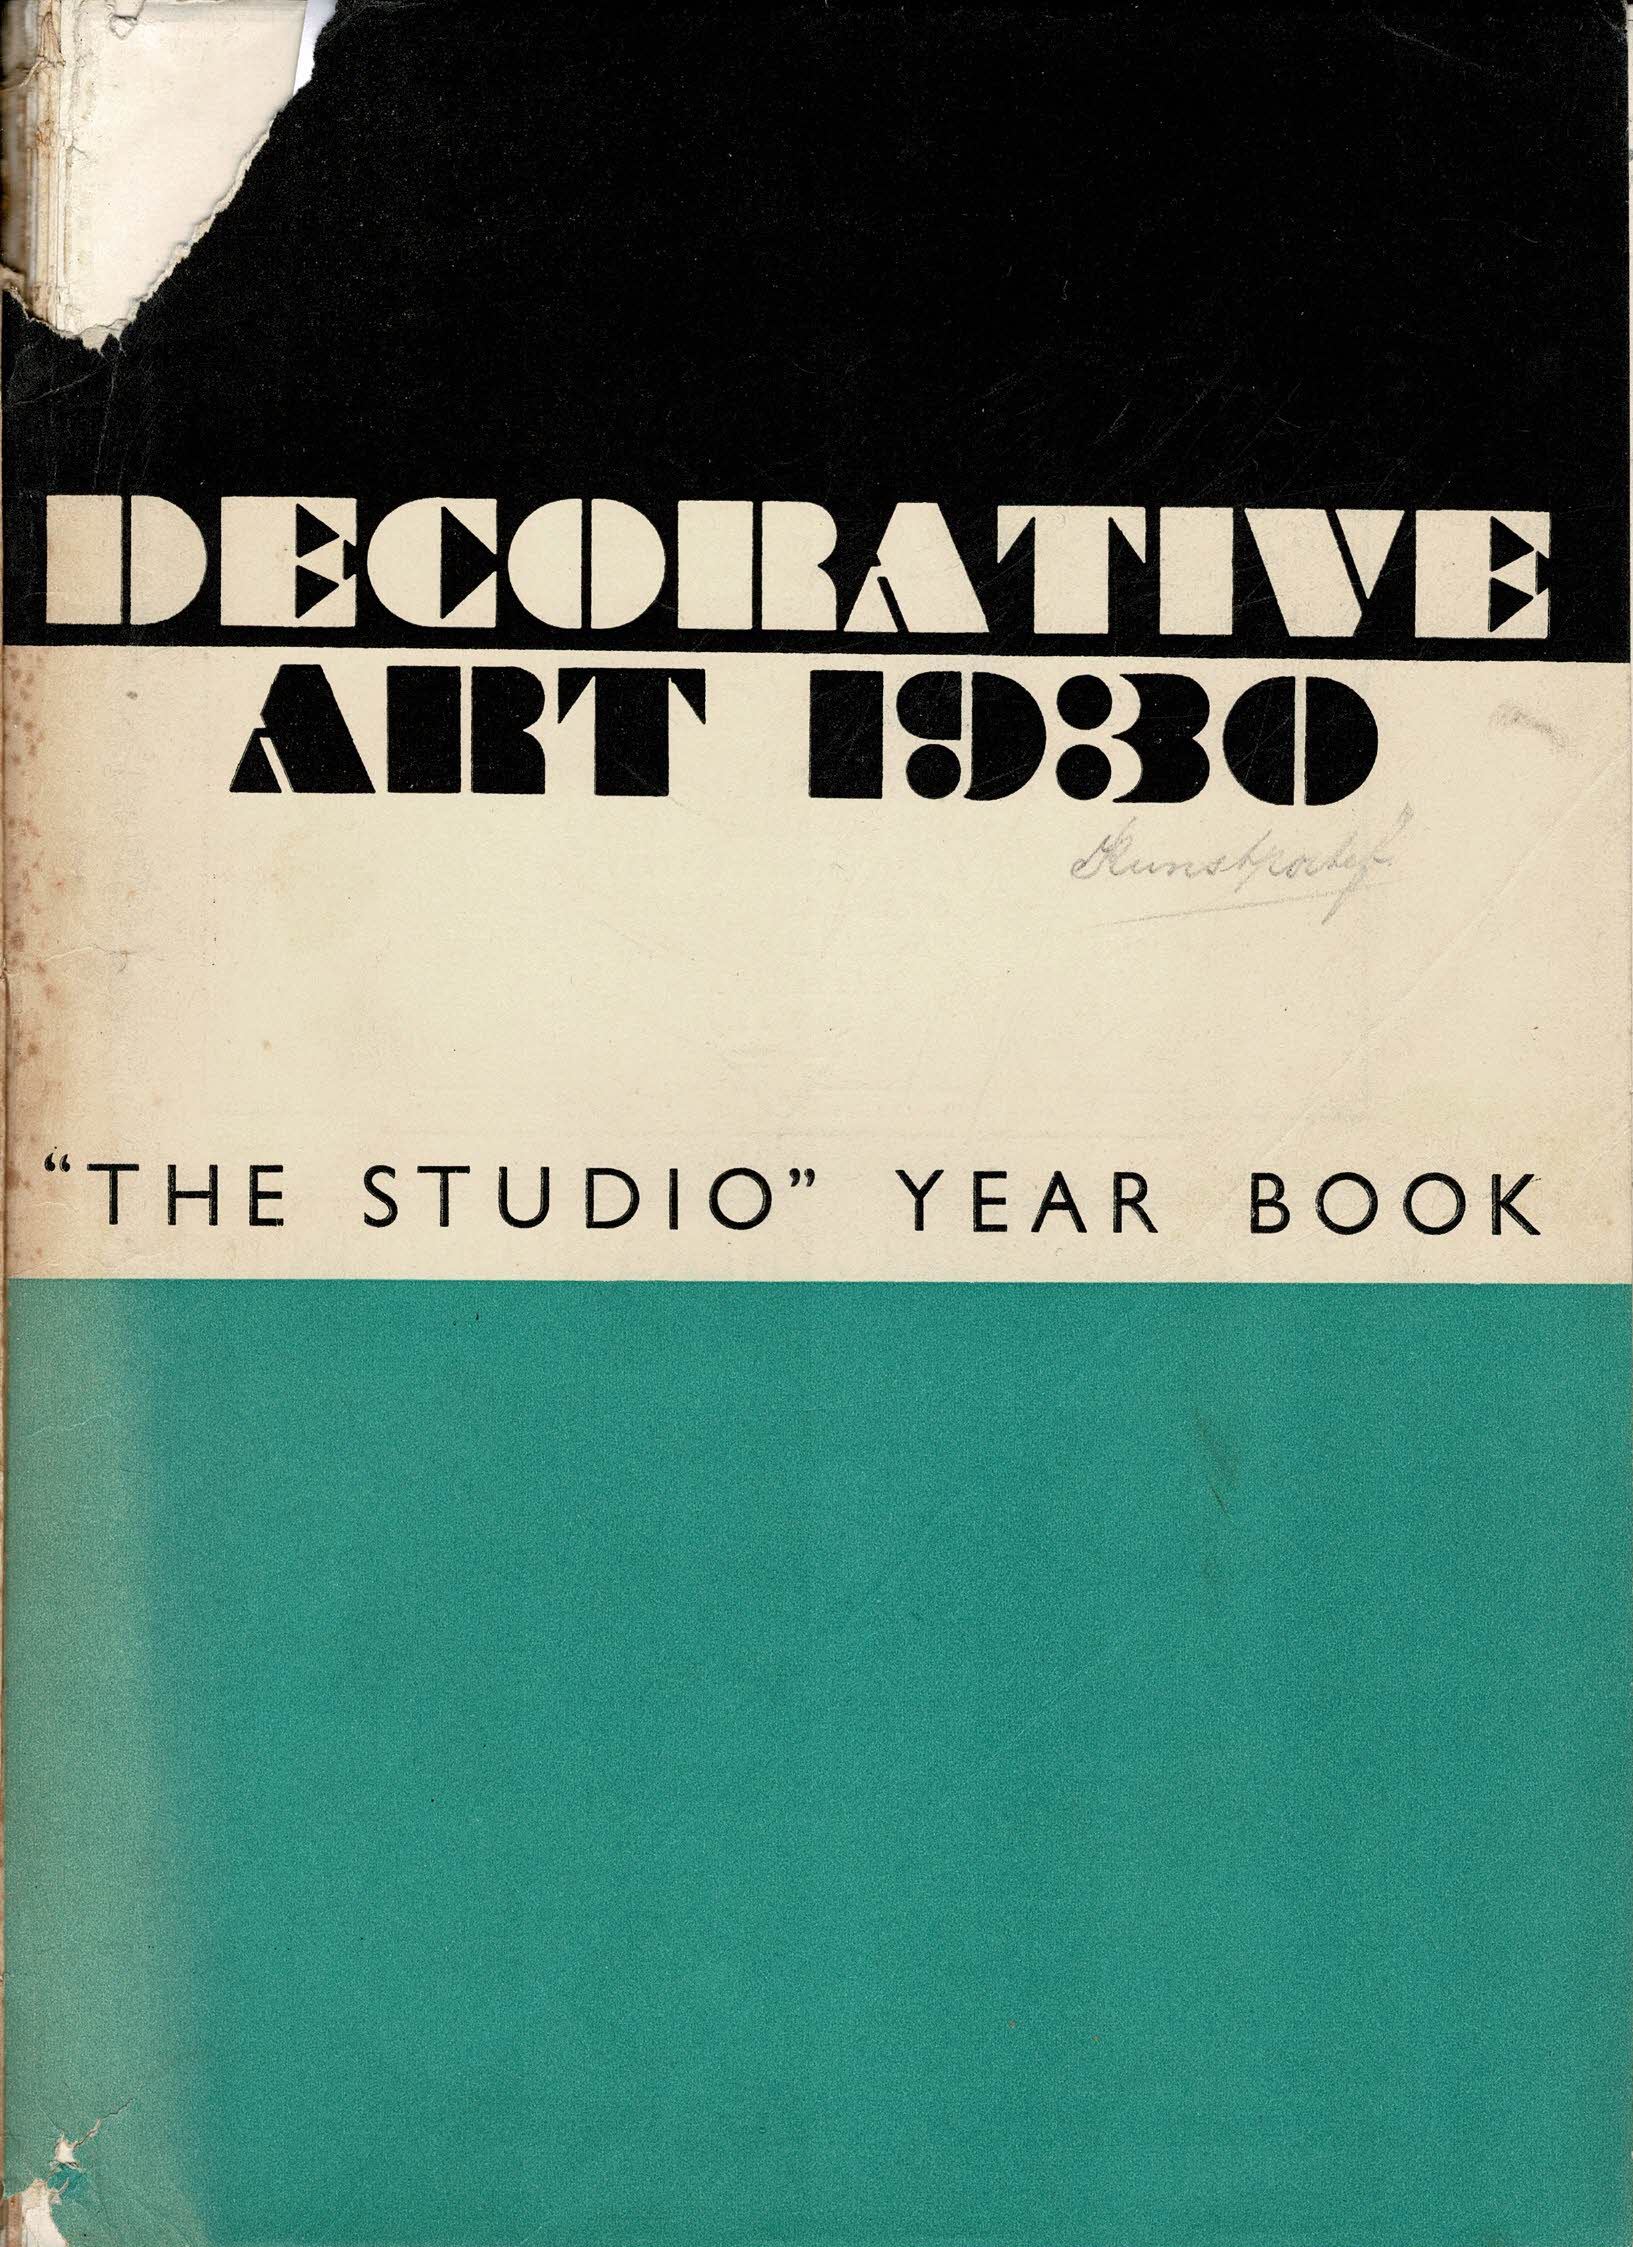 Holme C. G. editor - Decorative Art 1930. The Studio Year Book.